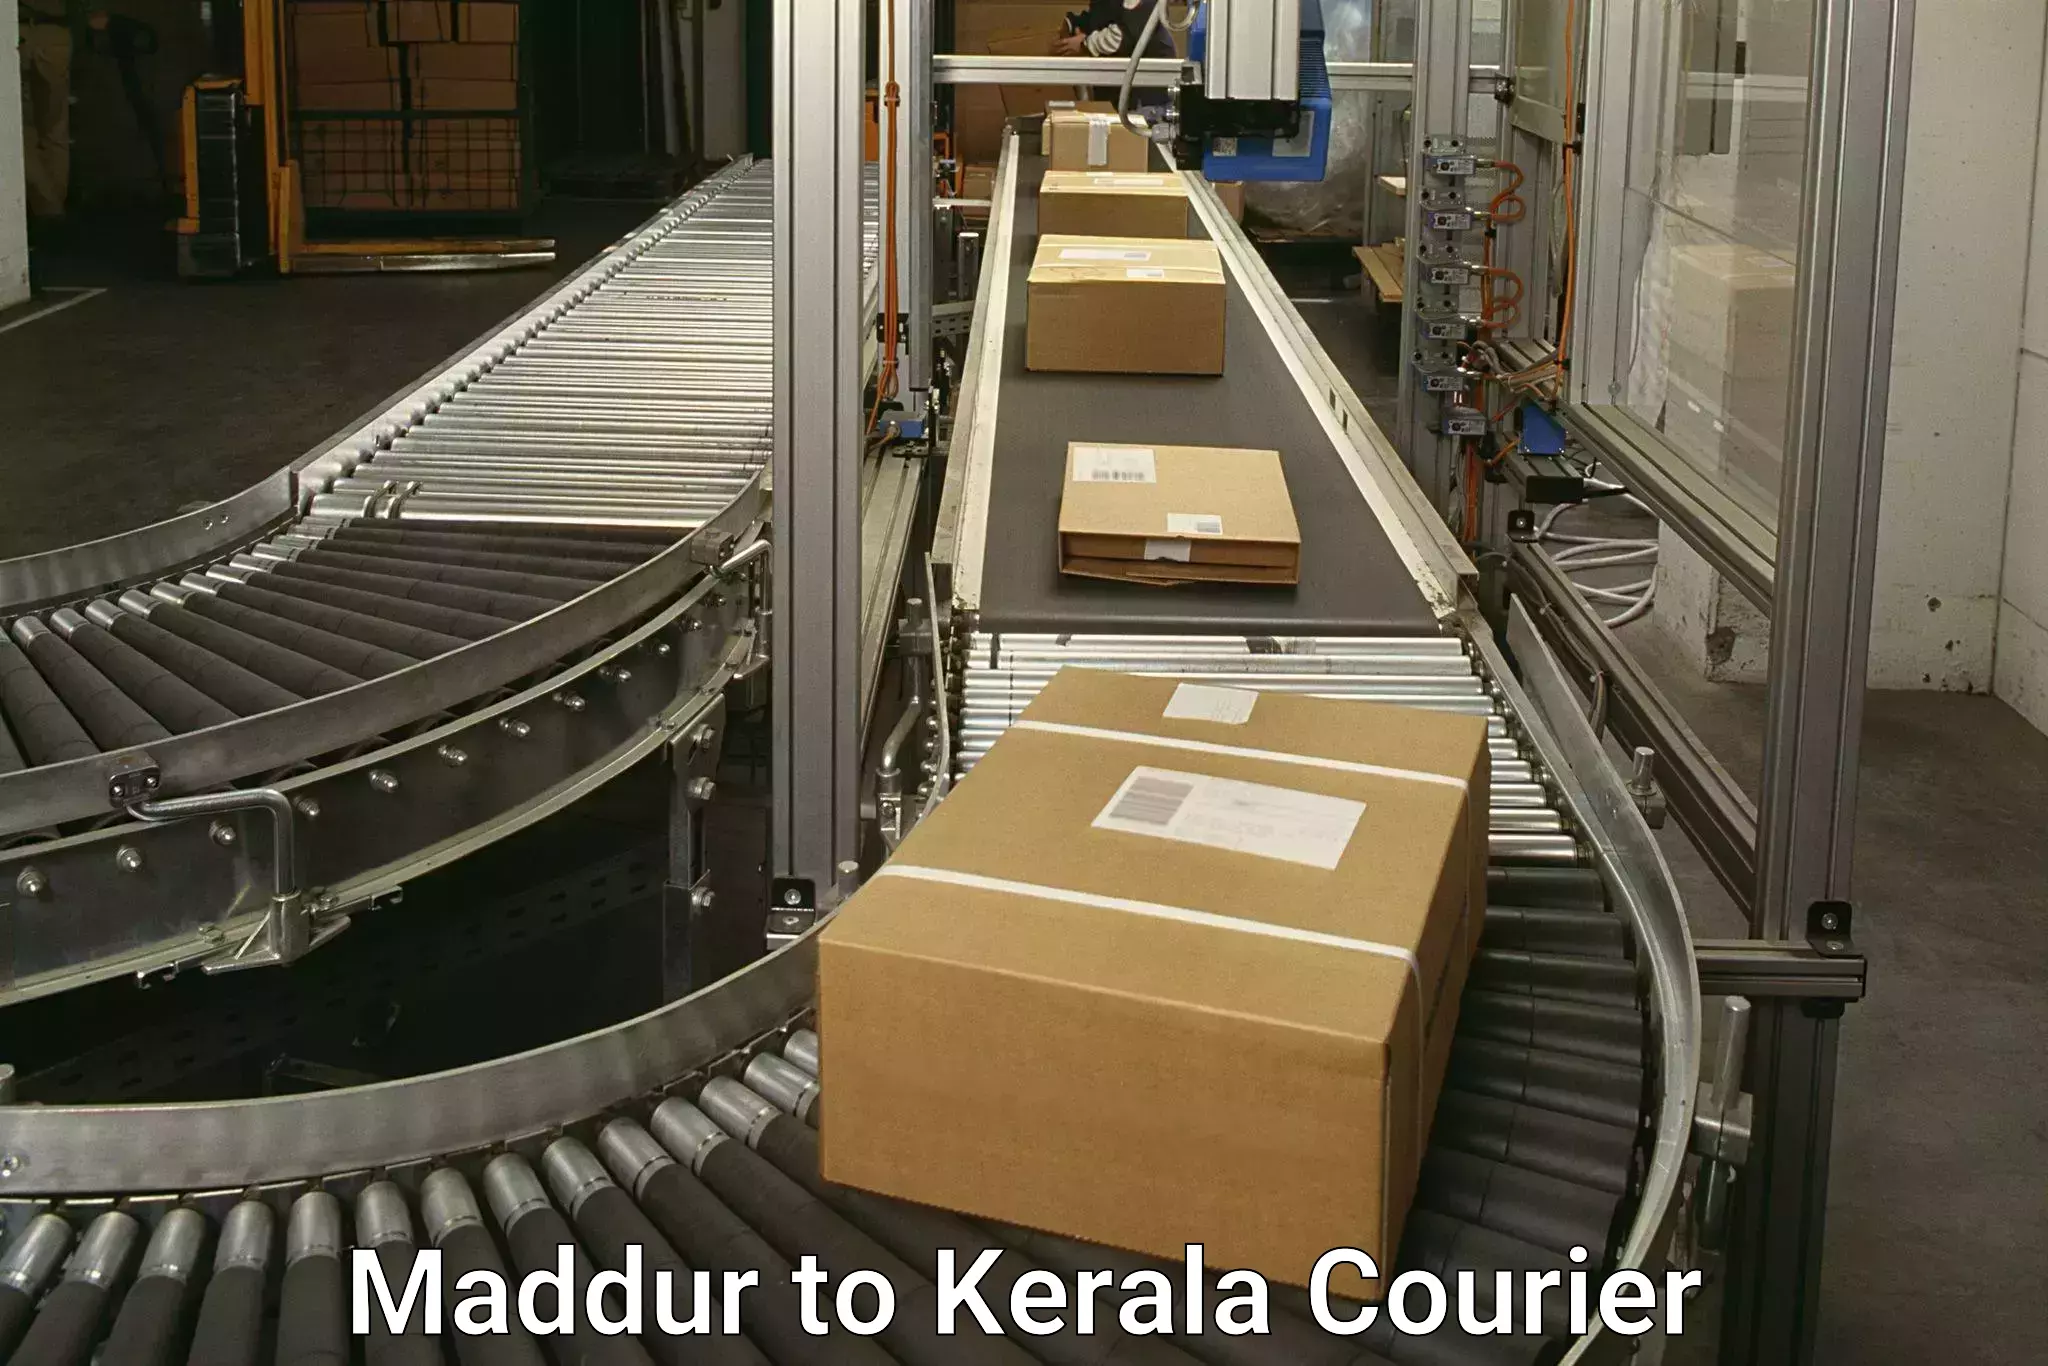 Expedited shipping methods Maddur to Ernakulam